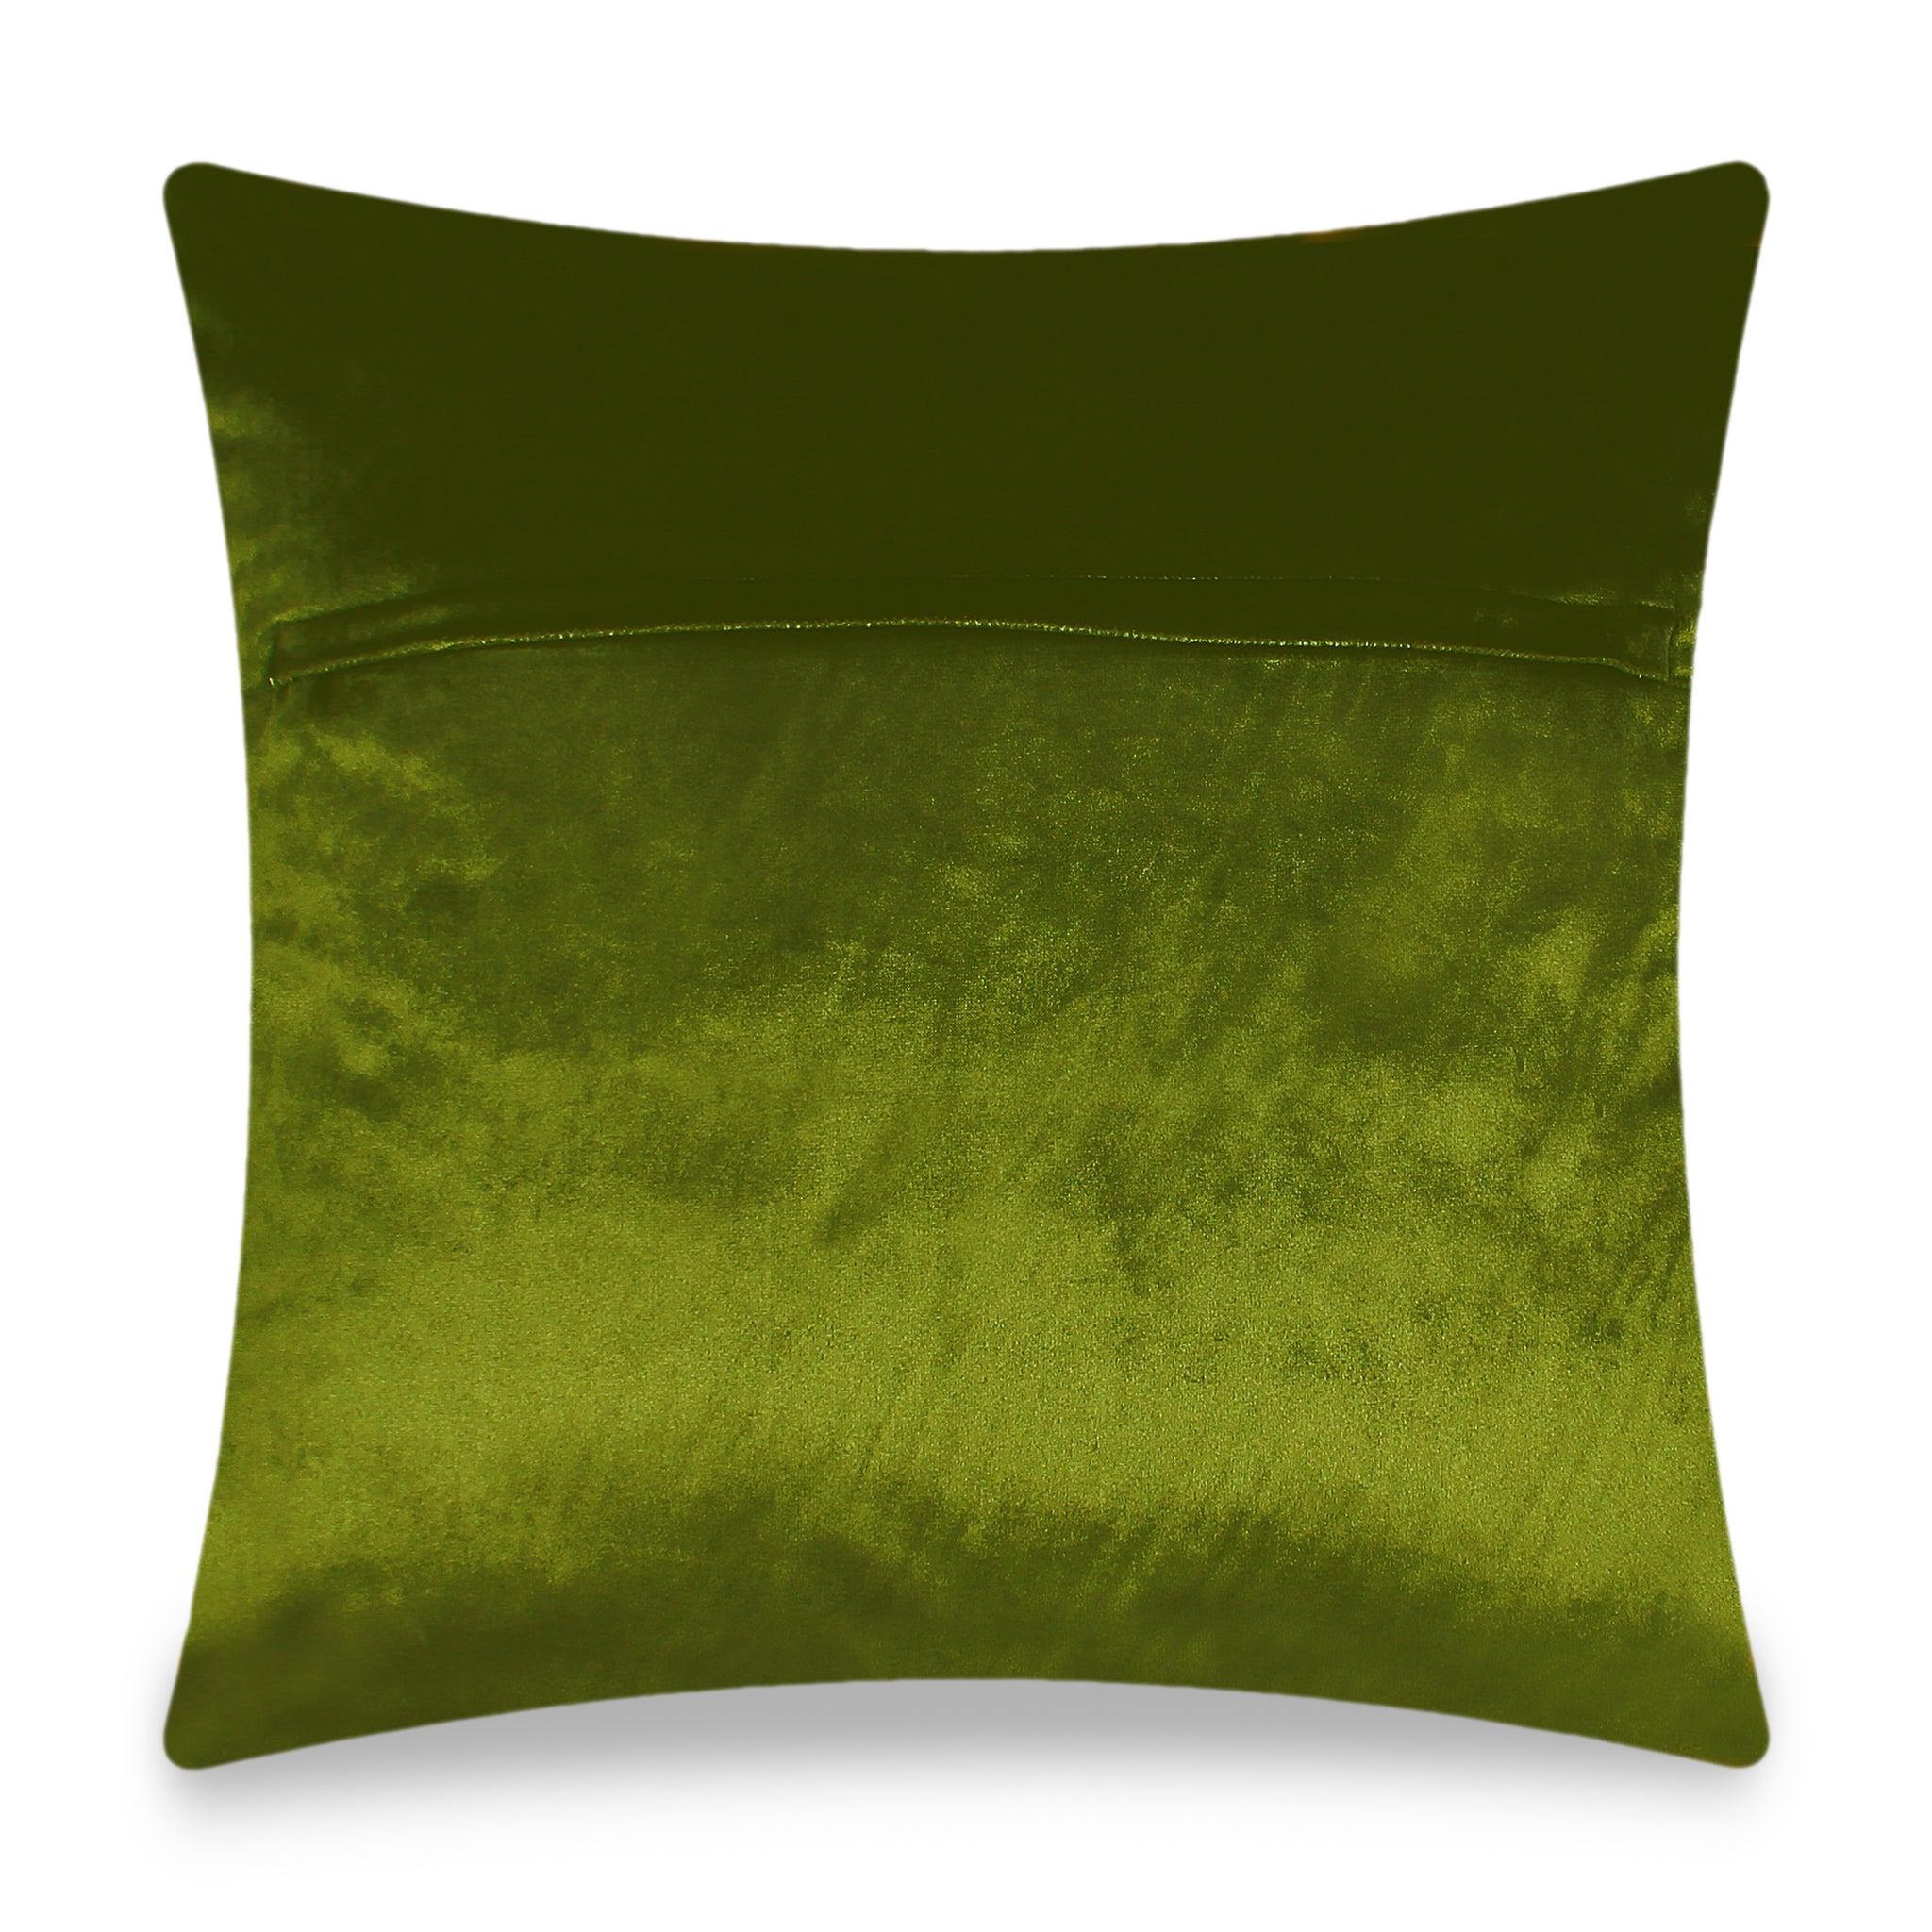  Velvet Cushion Cover Frida Kahlo and Florals Decorative Pillowcase Modern Home Decor Throw Pillow for Sofa Chair 45x45 cm 